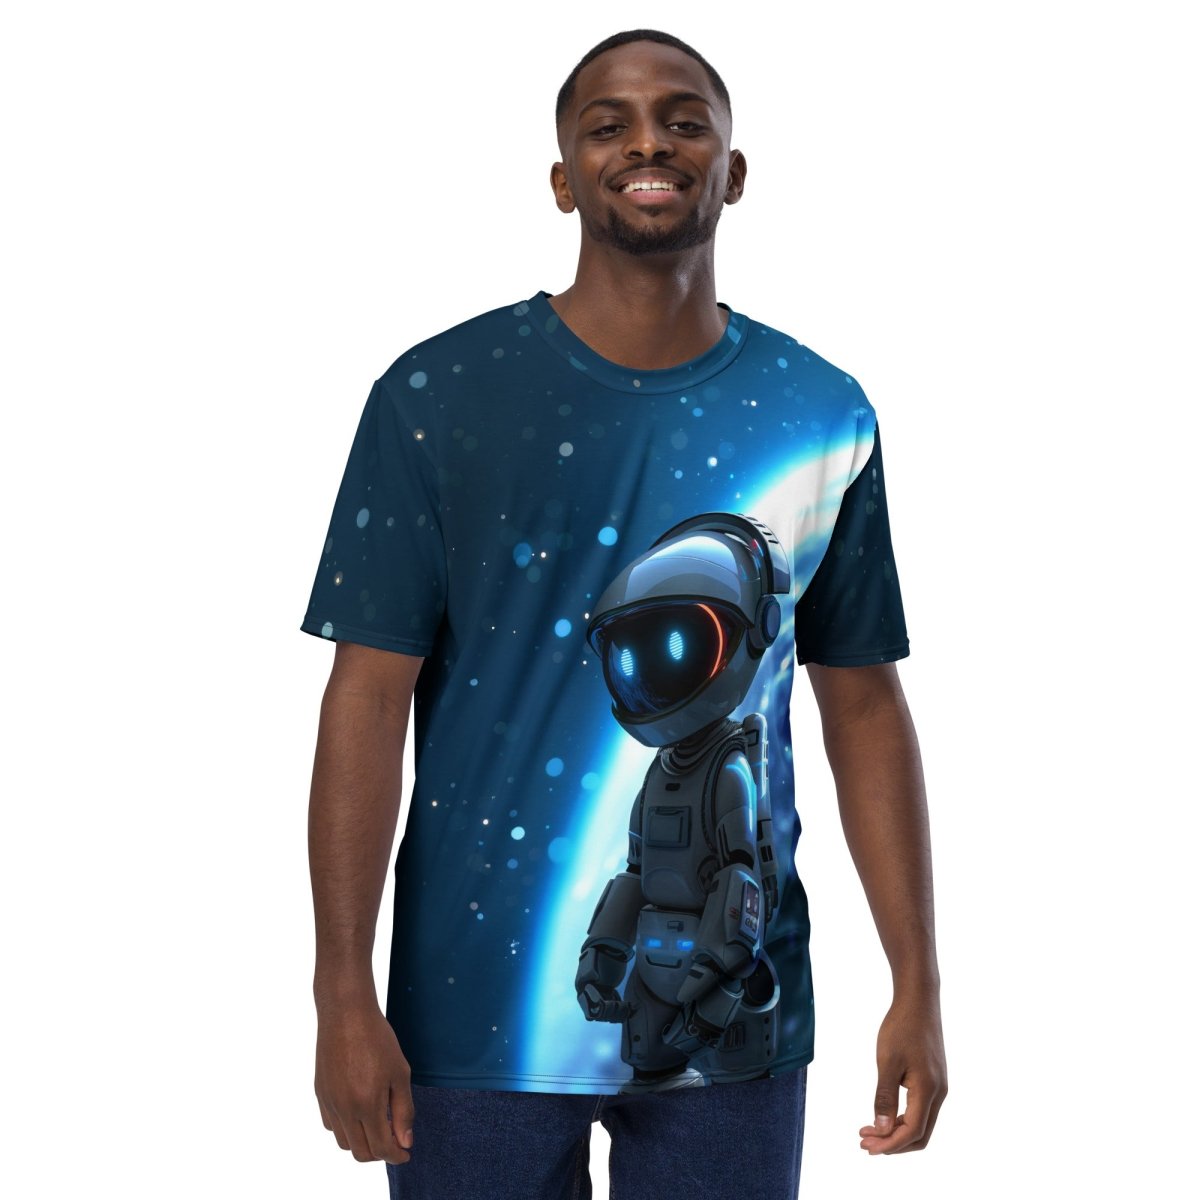 All-Over Print Space Robot Hero T-Shirt (men) - AI Store